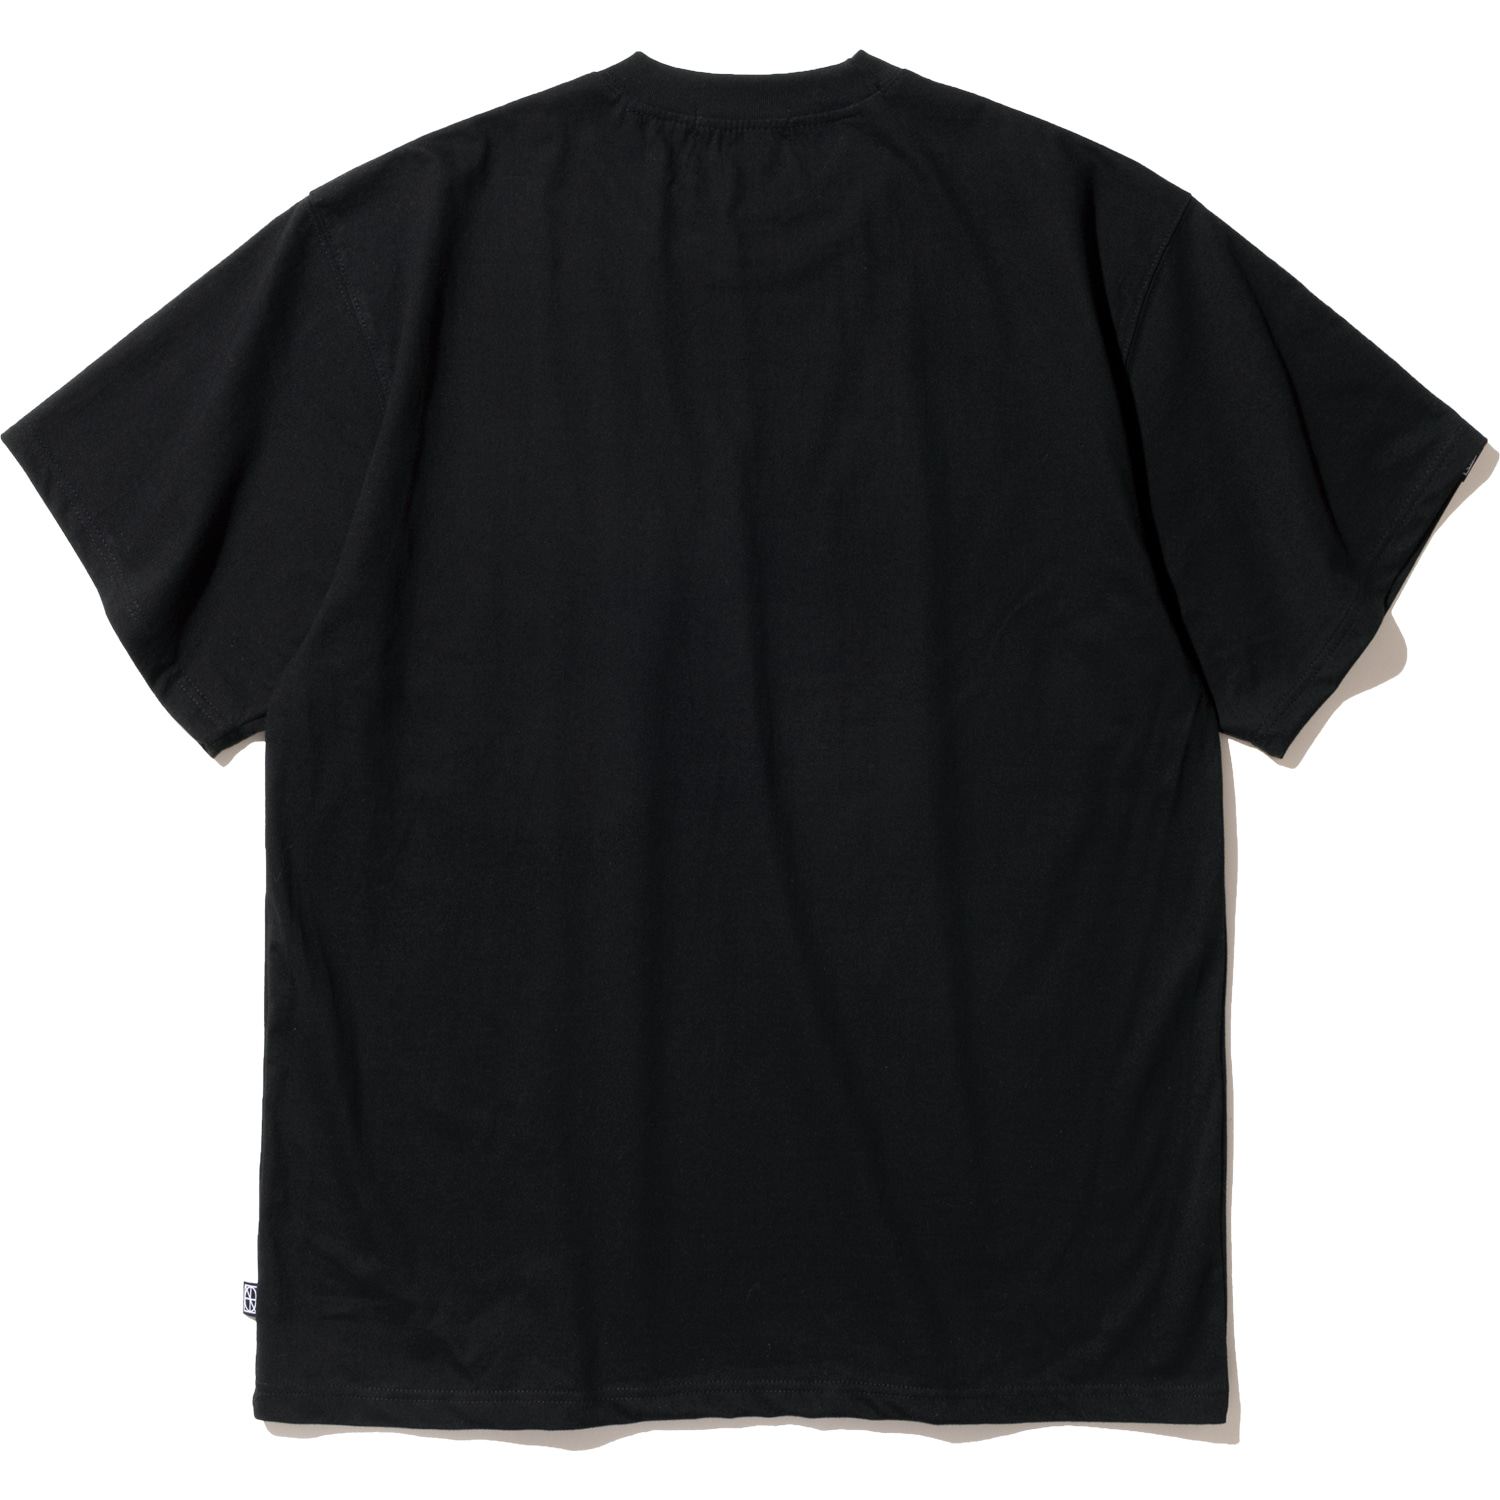 Mask T-Shirts - Black,NOT4NERD